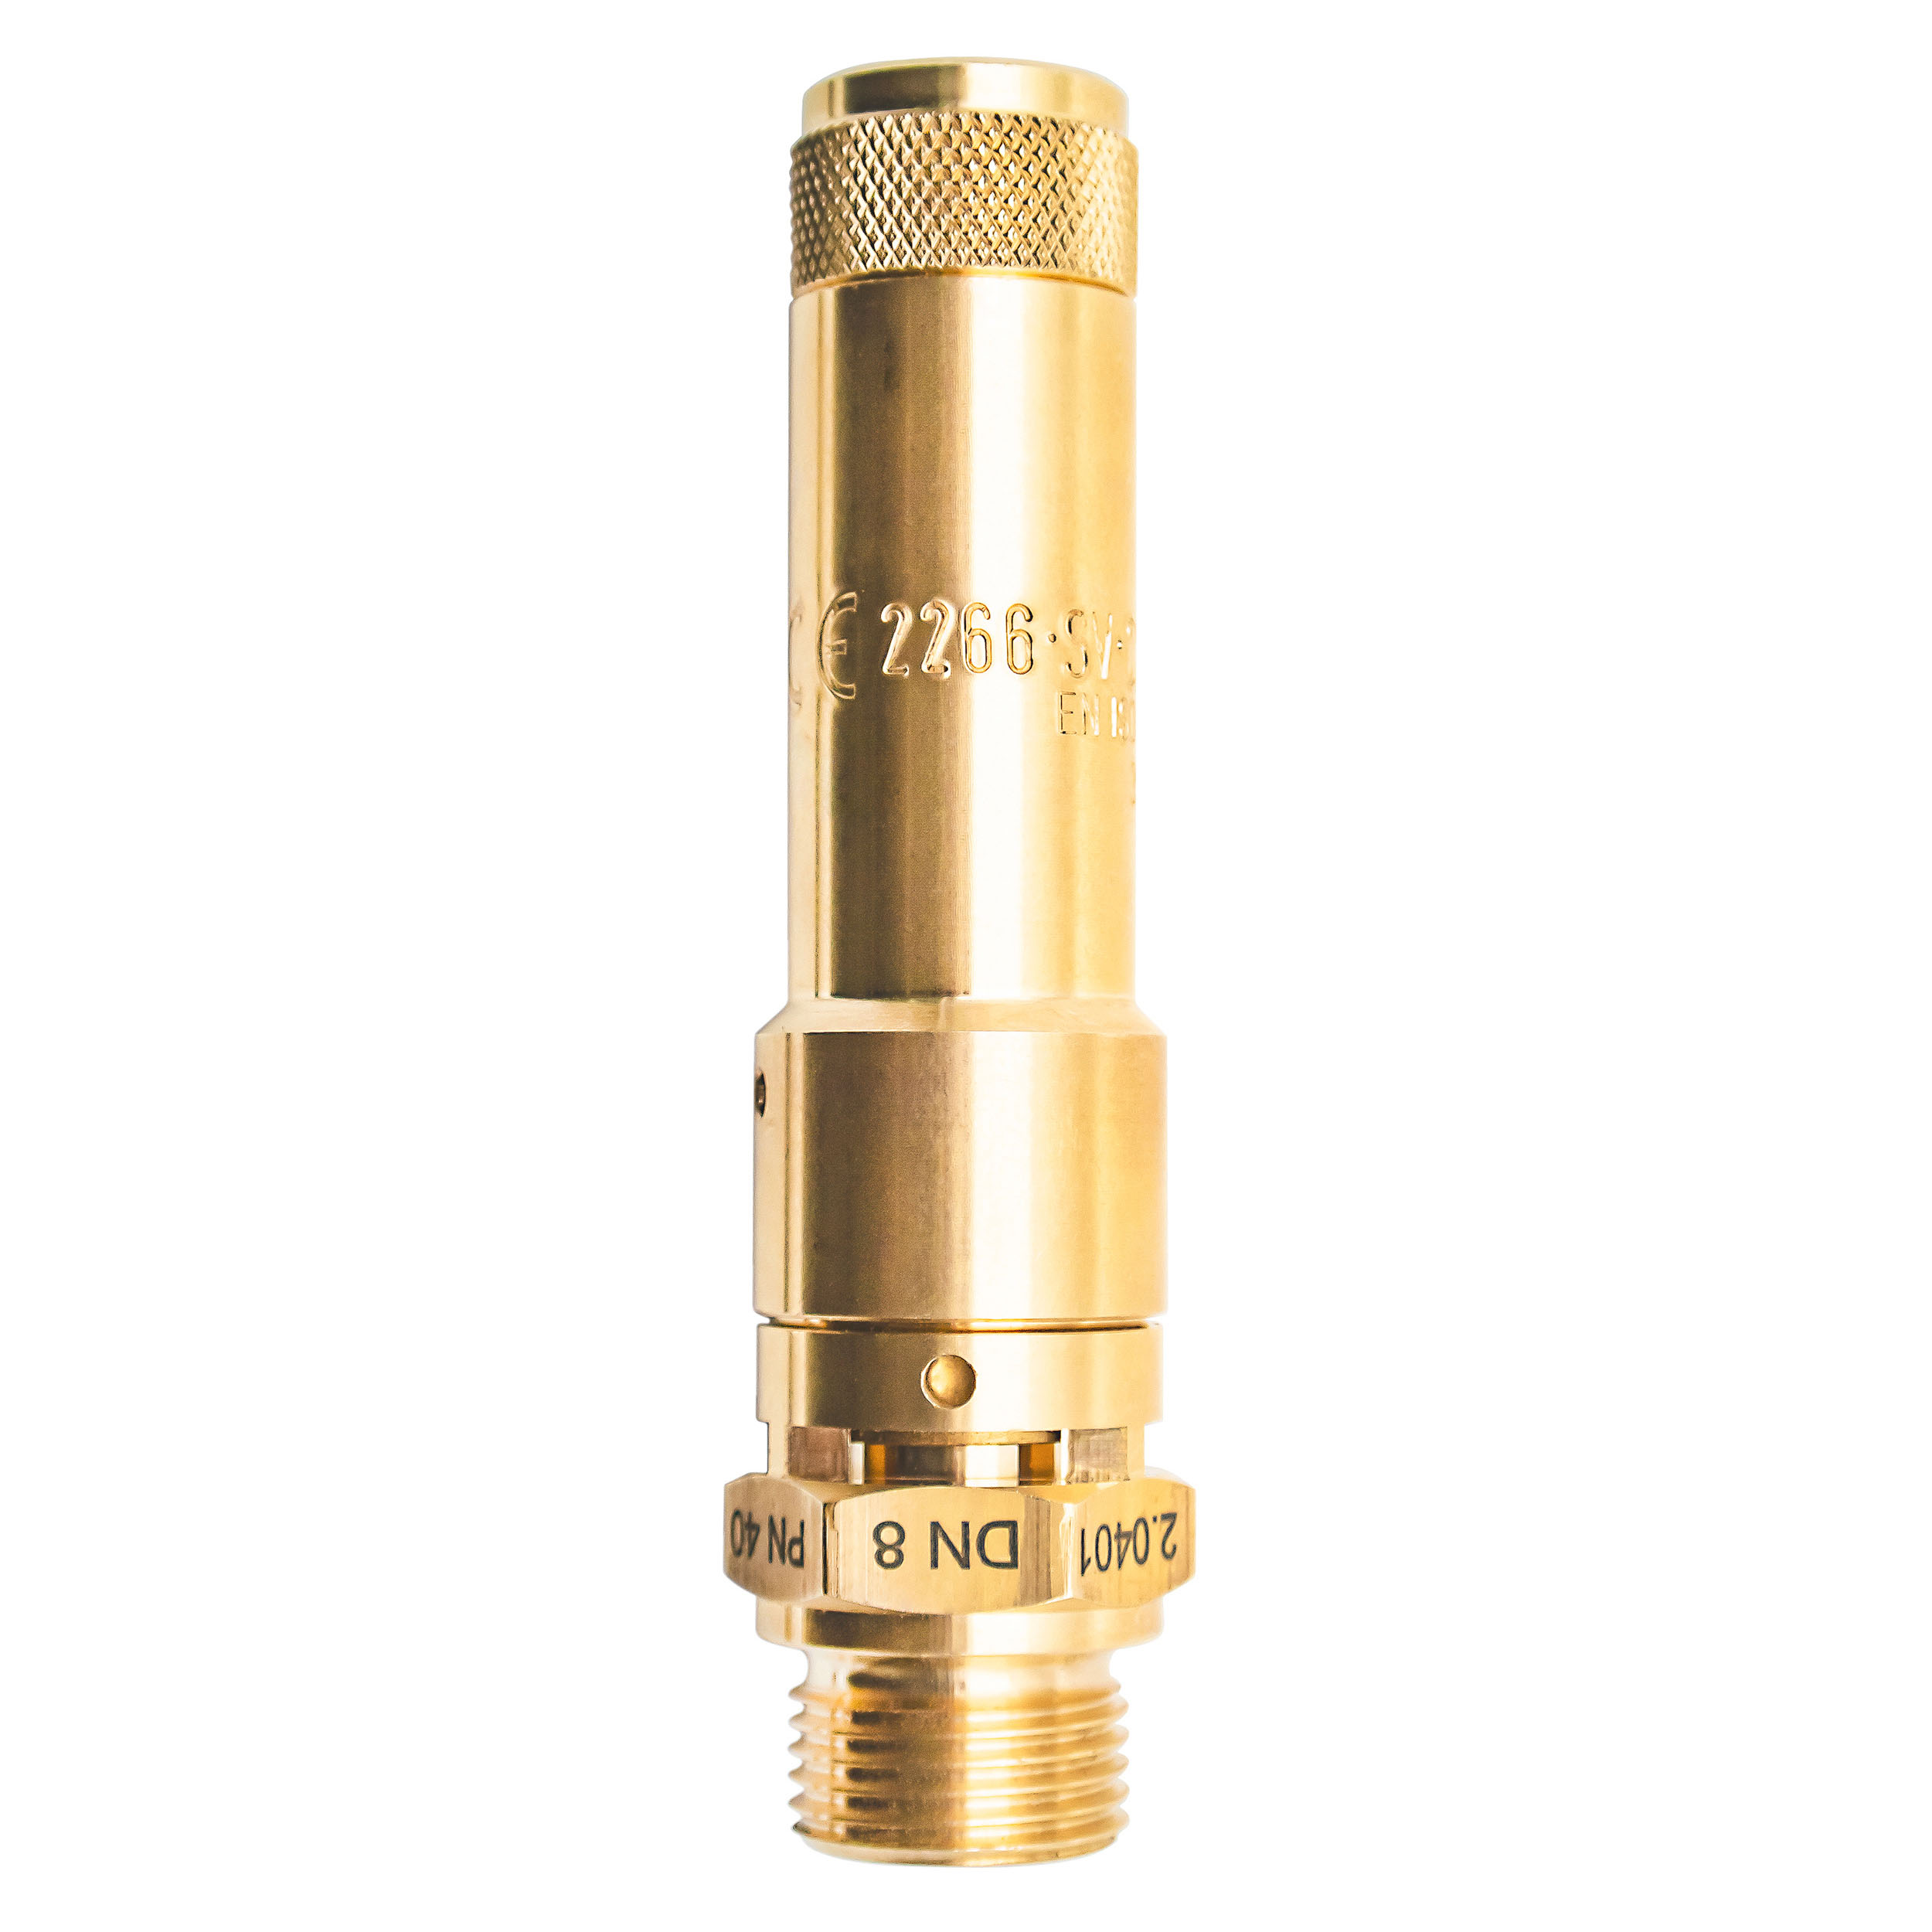 Savety valve component tested DN 8, G½, set pressure: 1.4 bar (20,3 psi)